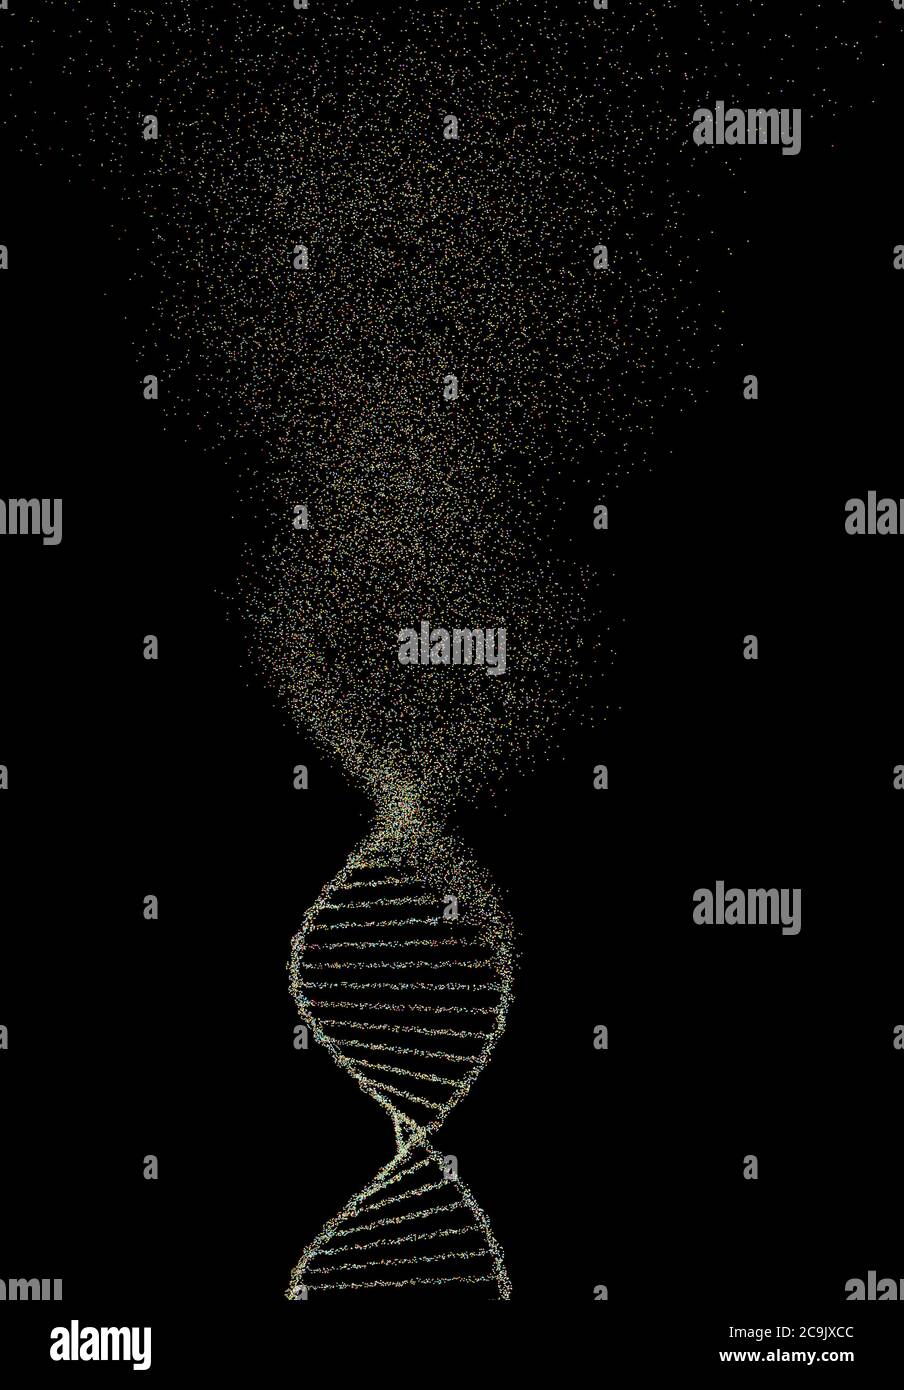 DNA damage, illustration. Stock Photo